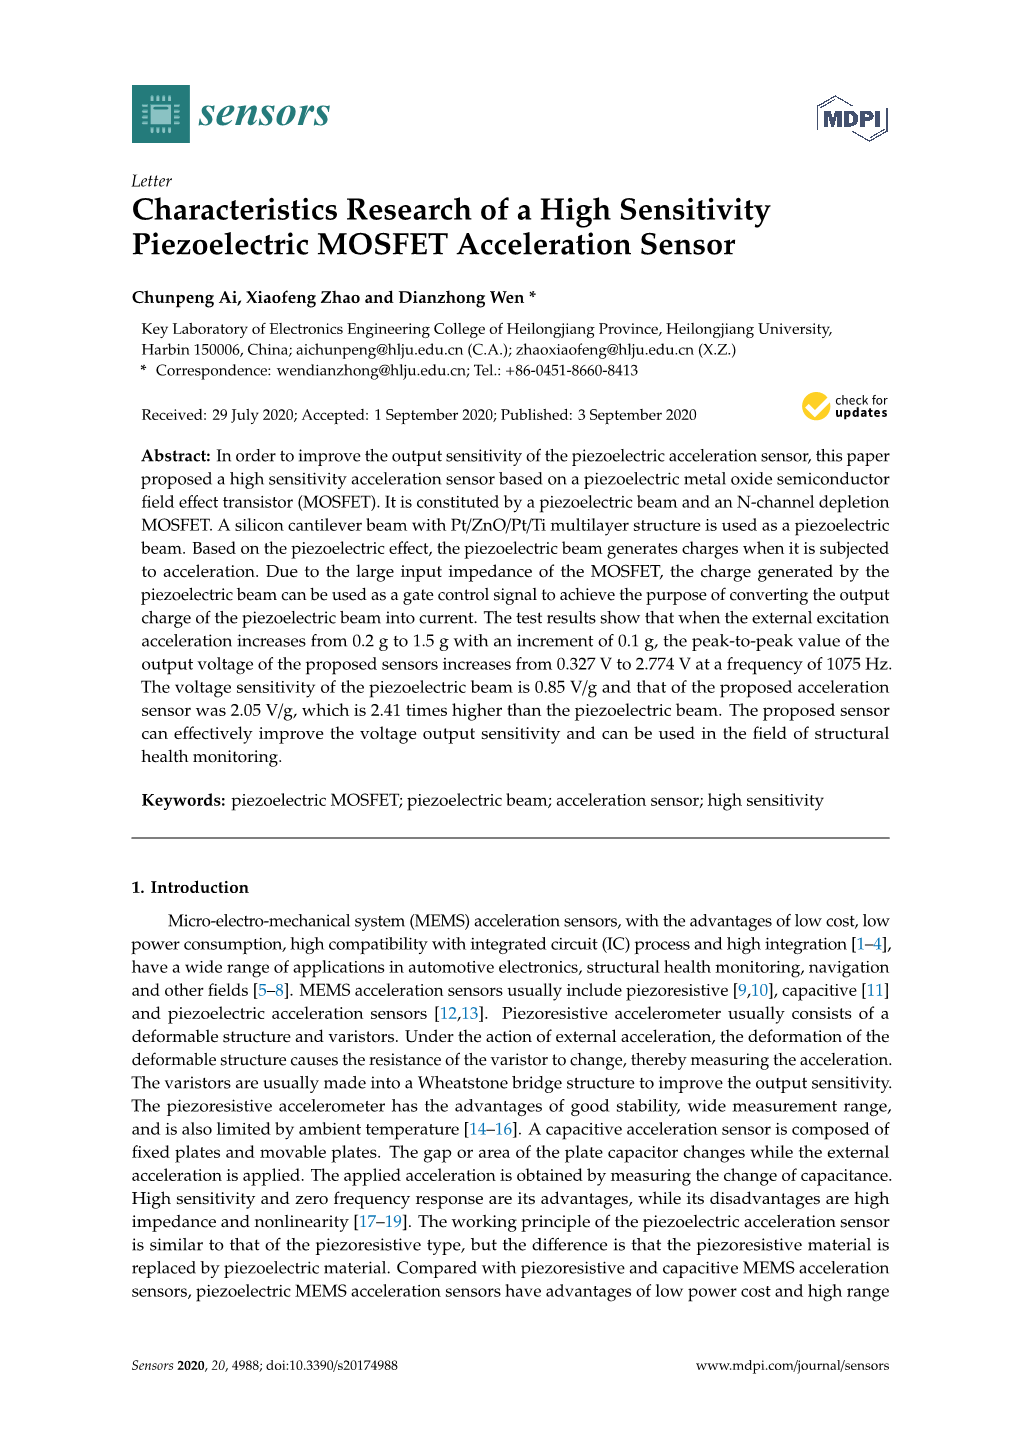 Characteristics Research of a High Sensitivity Piezoelectric MOSFET Acceleration Sensor